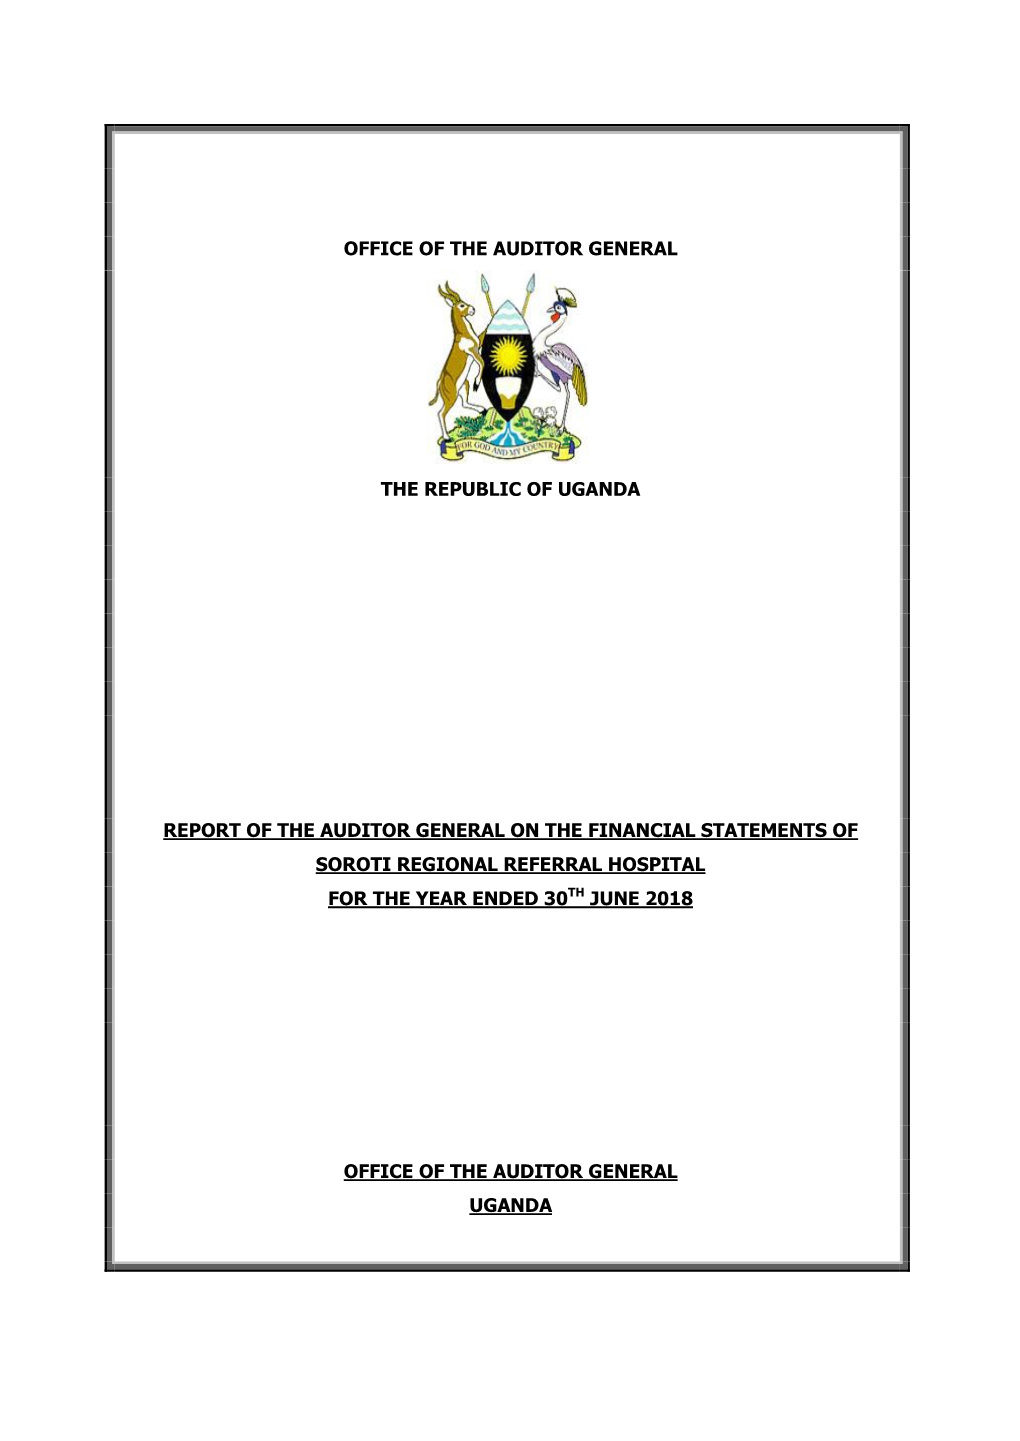 SOROTI-REGIONAL-REFERRAL-HOSPITAL-REPORT-OF-THE-AUDITOR-GENERAL-2018..Pdf